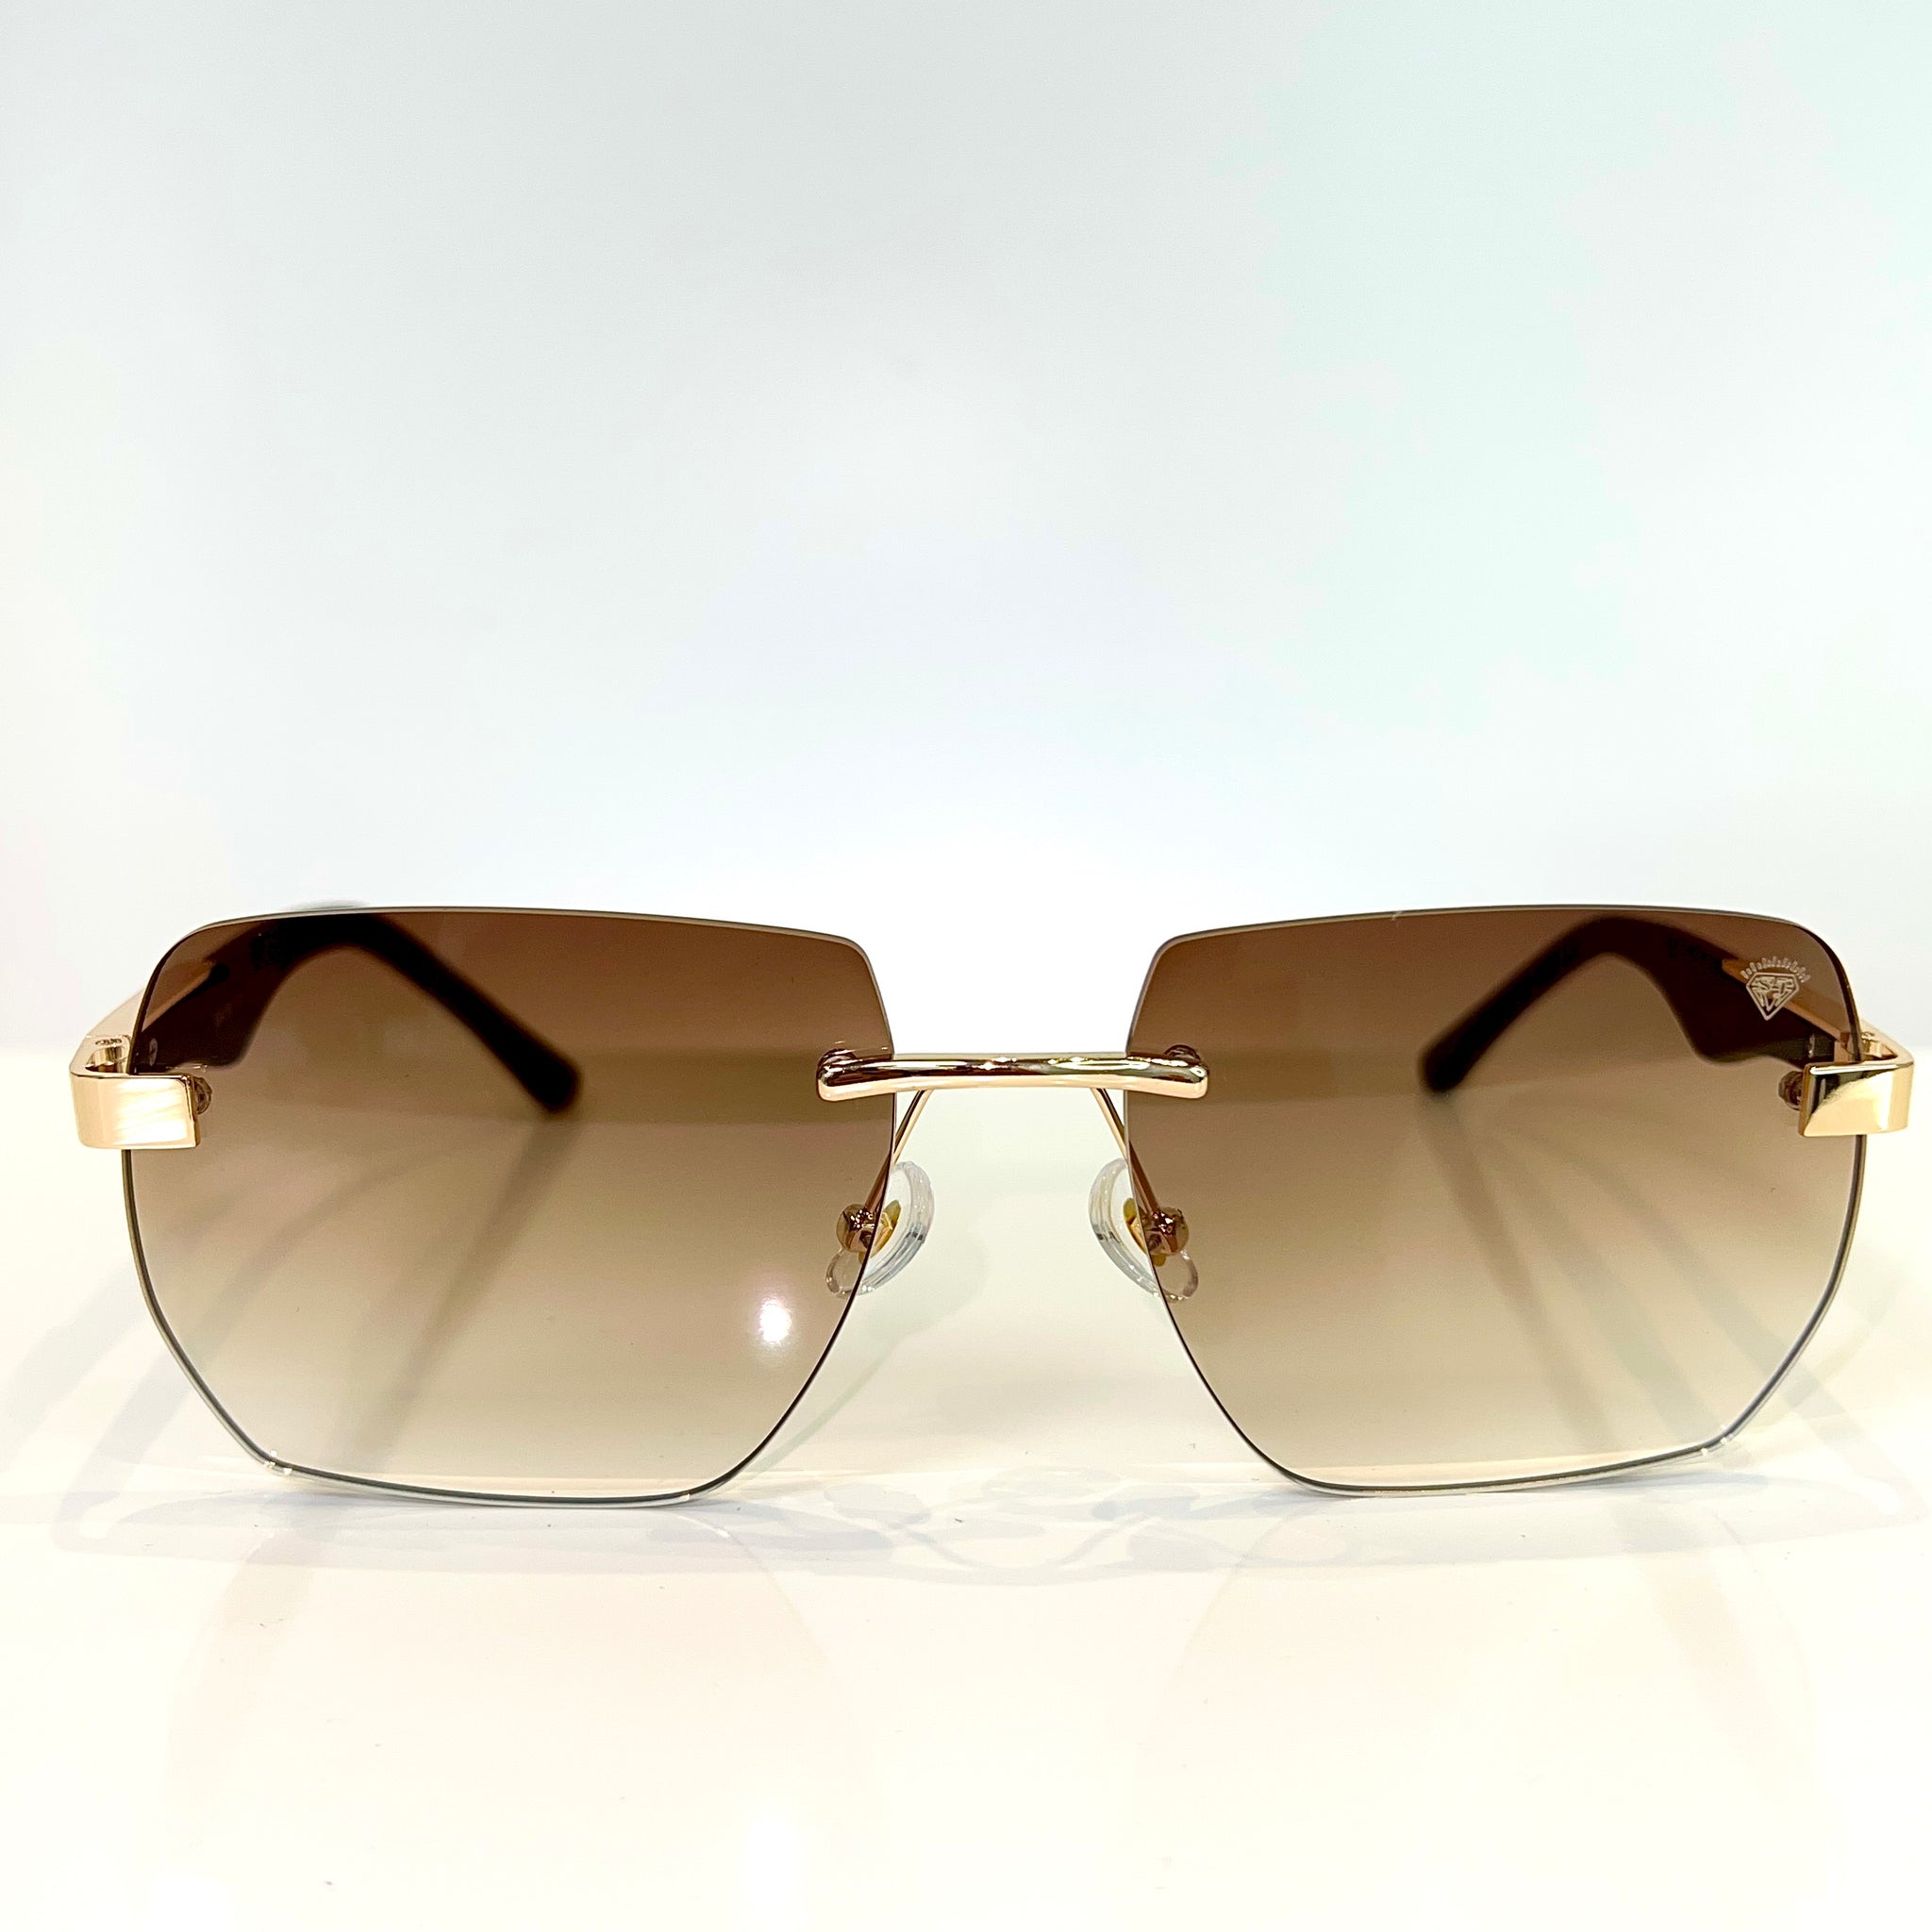 Dubai Glasses - 14 carat gold plated -  Brown Shade